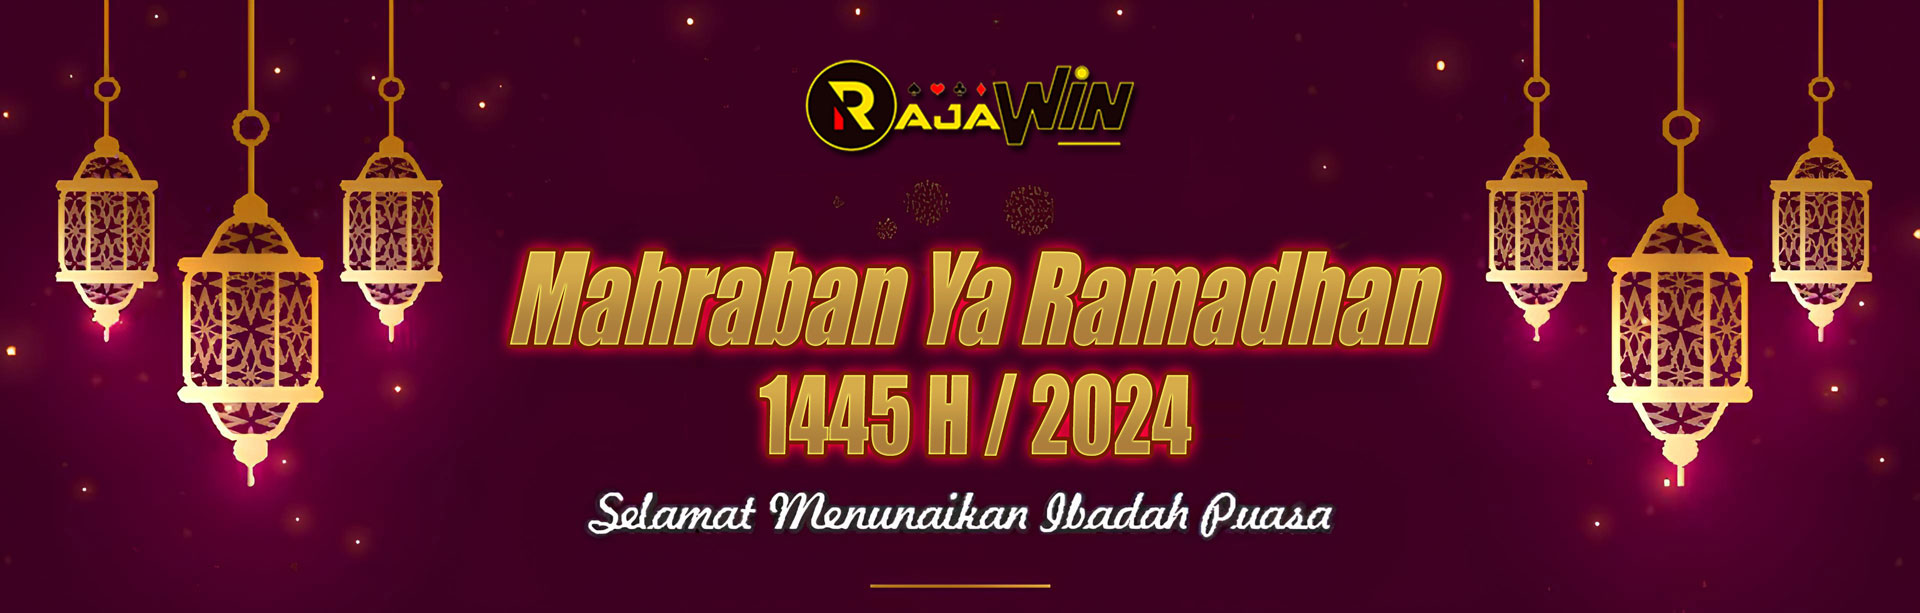 Banner Ramadhan Rajawin